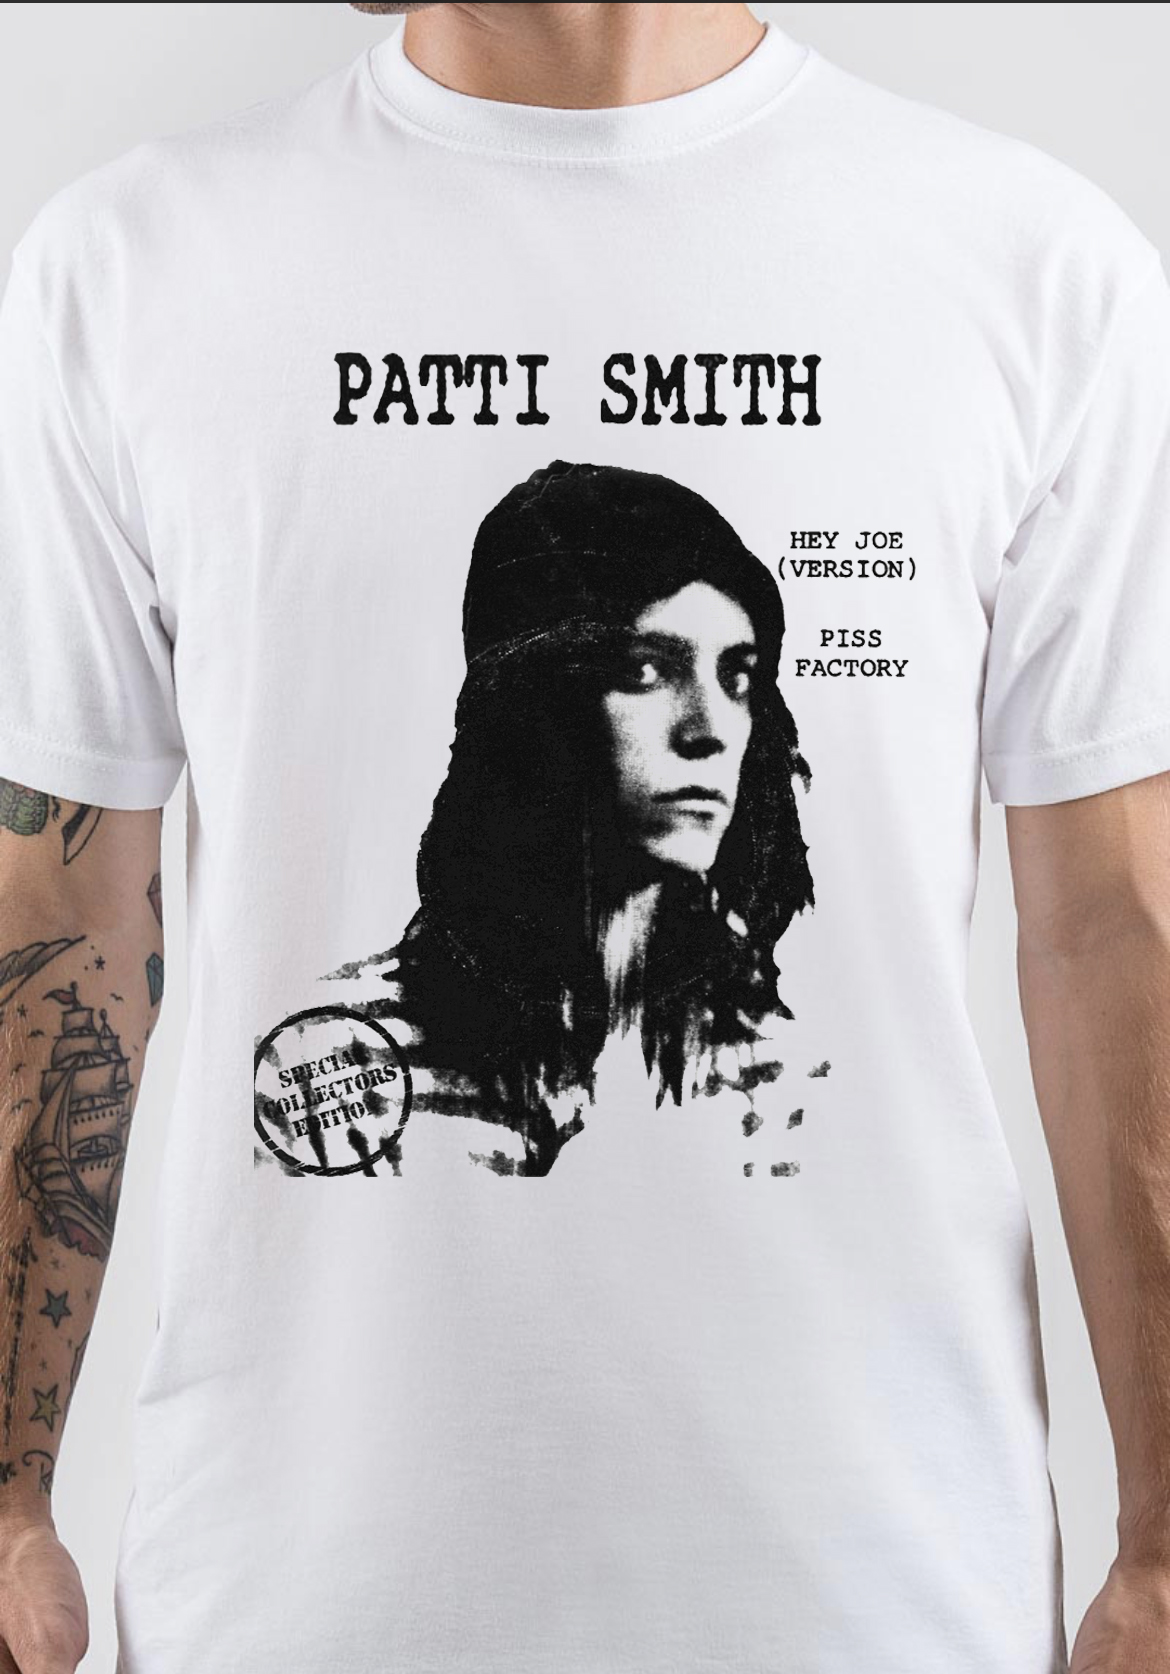 Patti Smith T-Shirt And Merchandise